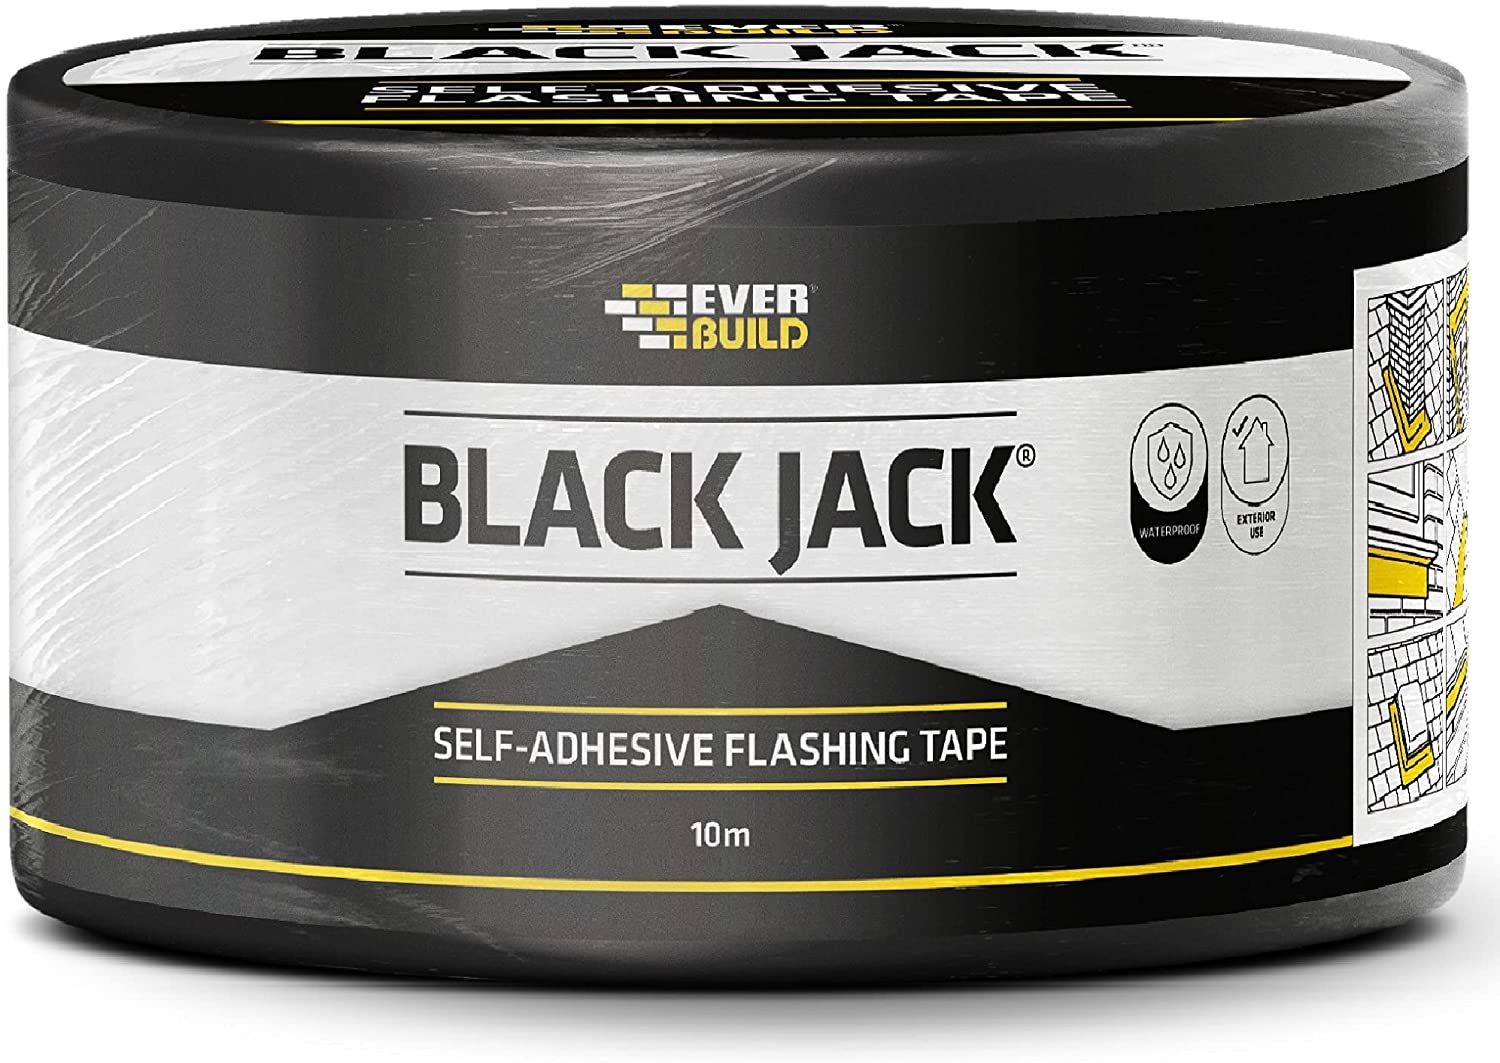 Everbuild – Black Jack Flashing Tape – 10m – 100mm x 10m – Tapes – Just The Job Supplies